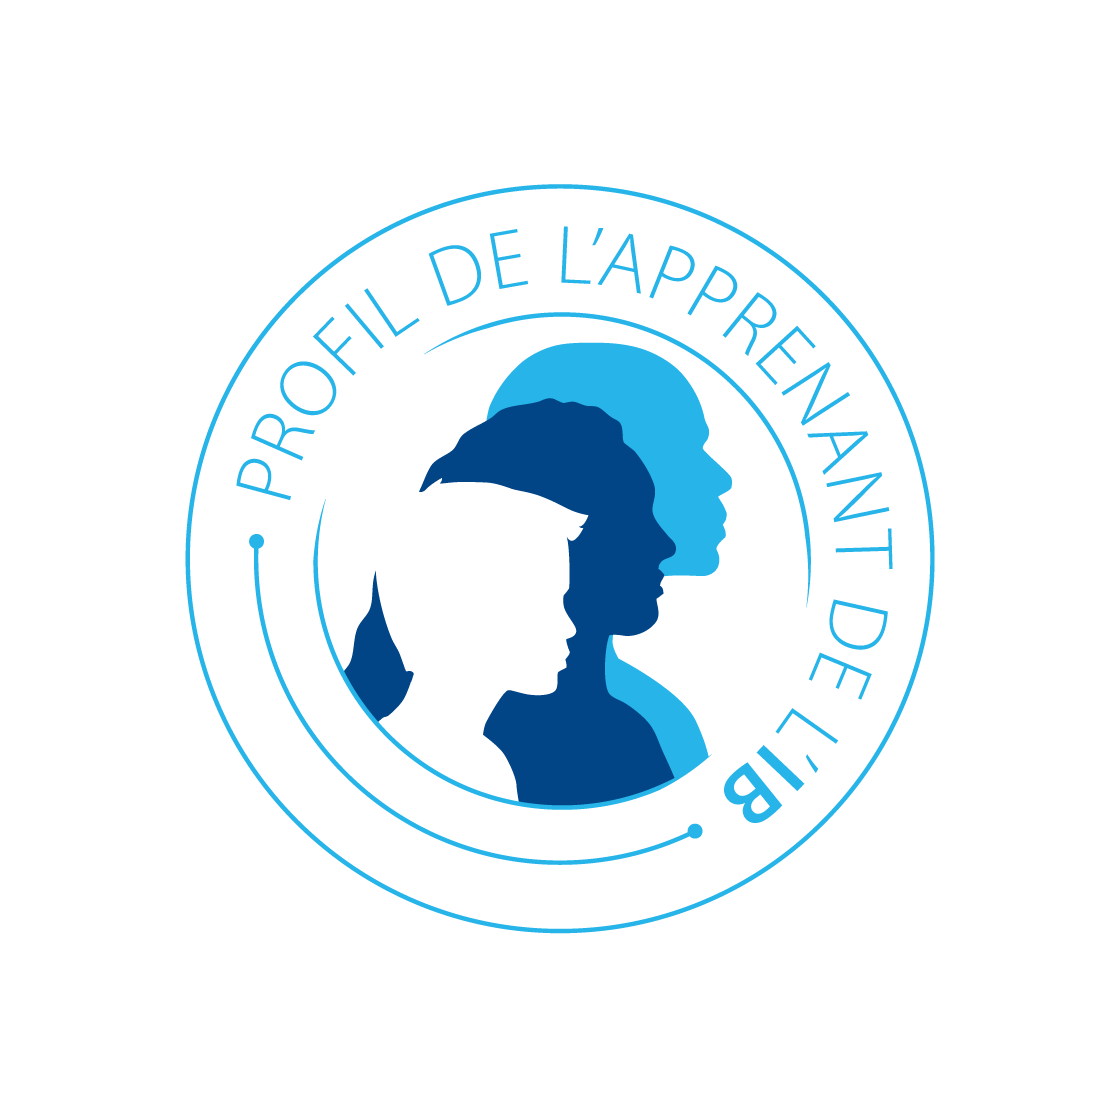 IB learner profile logo